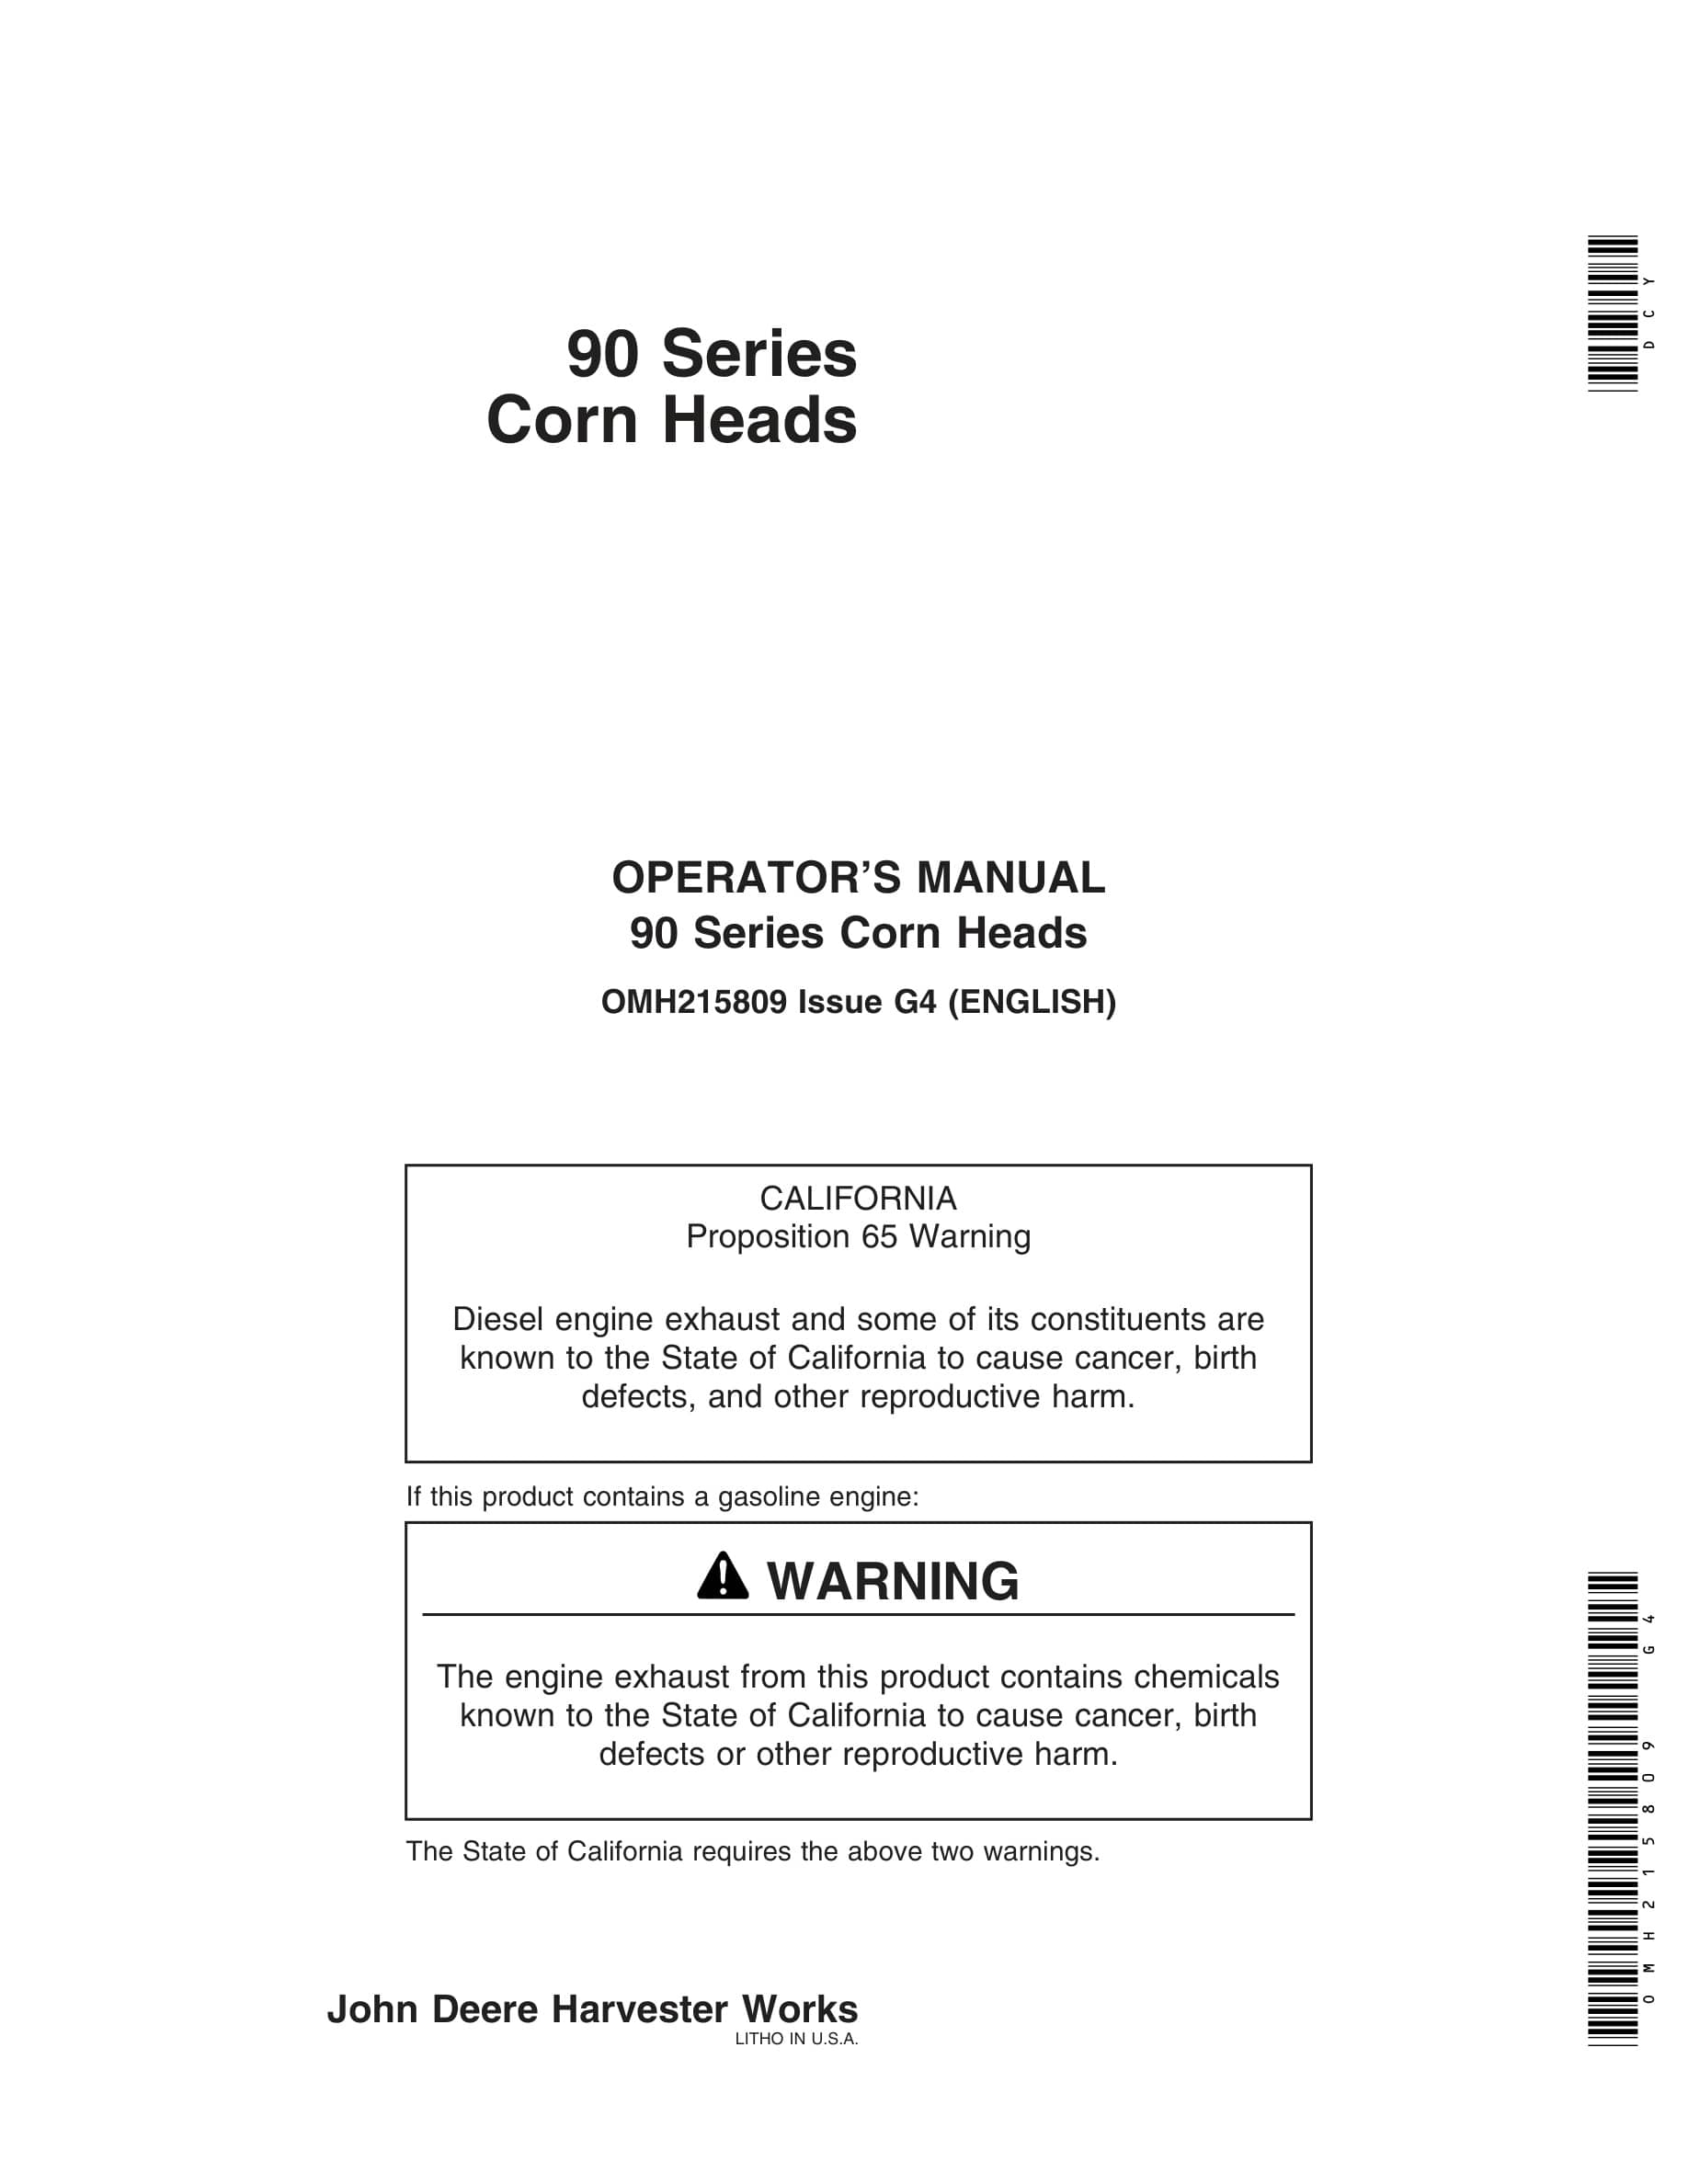 John Deere 90 Series Corn Heads Operator Manual OMH215809-1